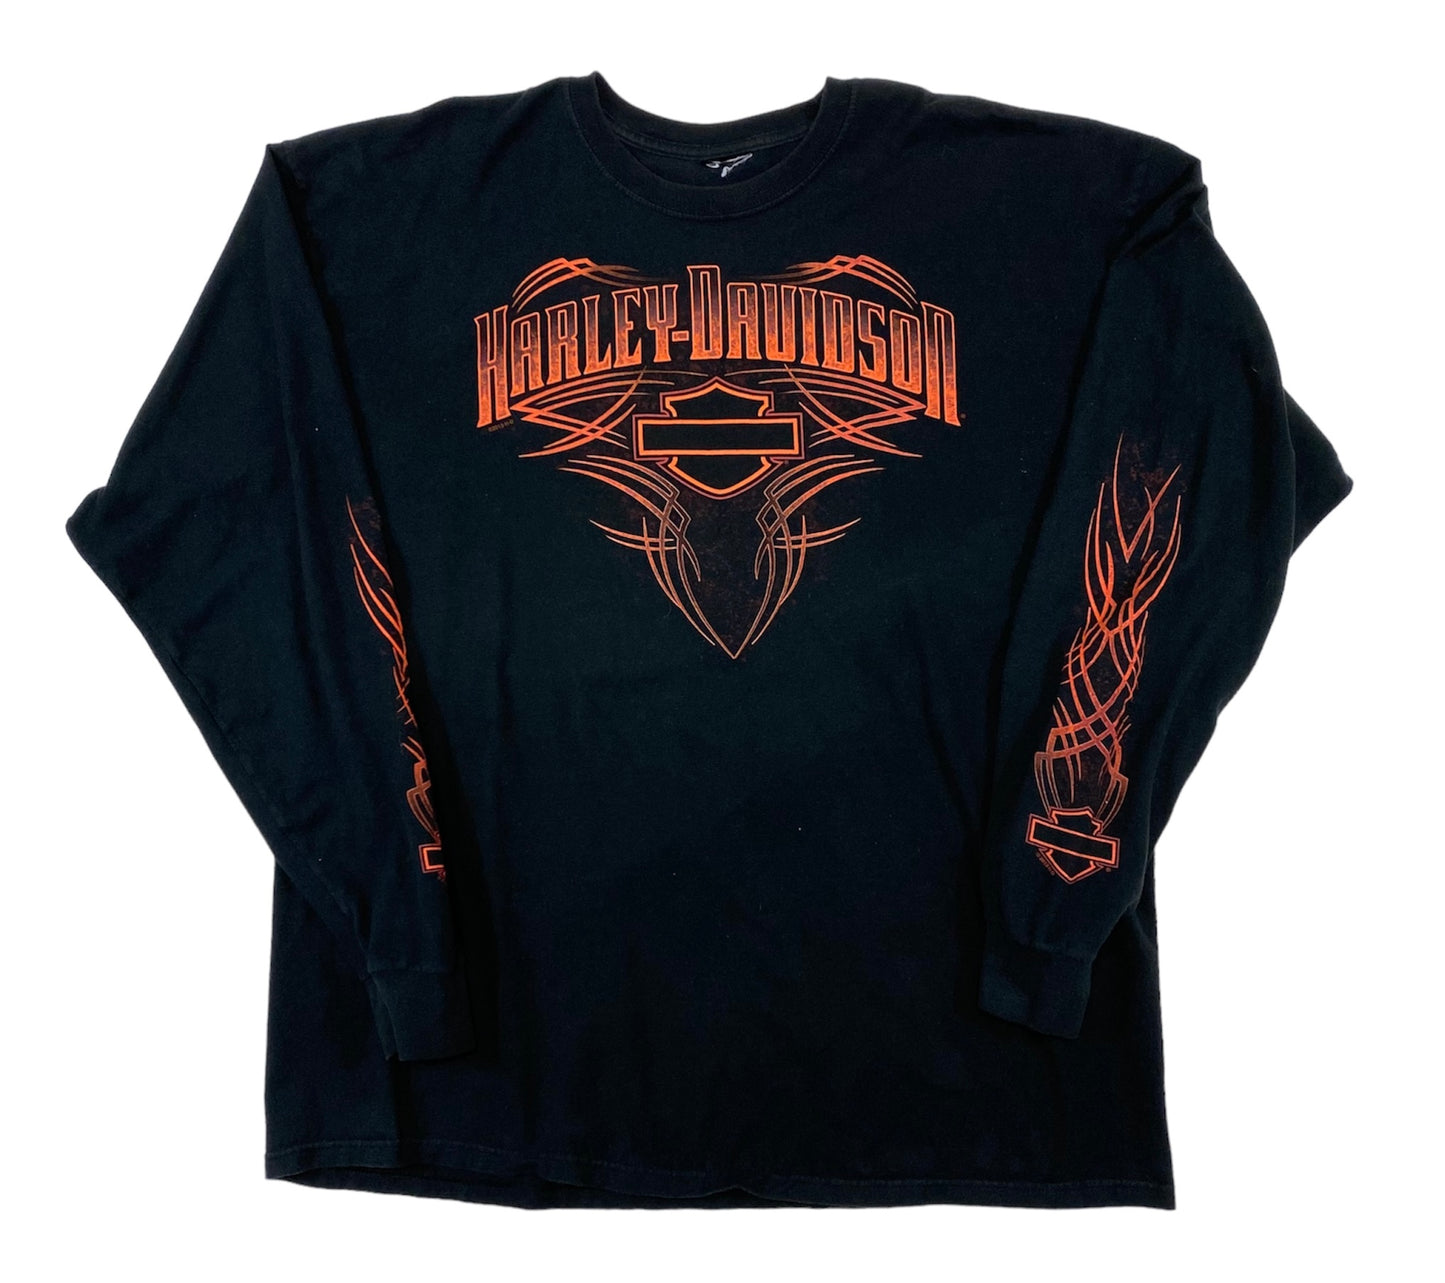 2013 Harley Davidson New Hampshire Longsleeve T-Shirt XL/XXL